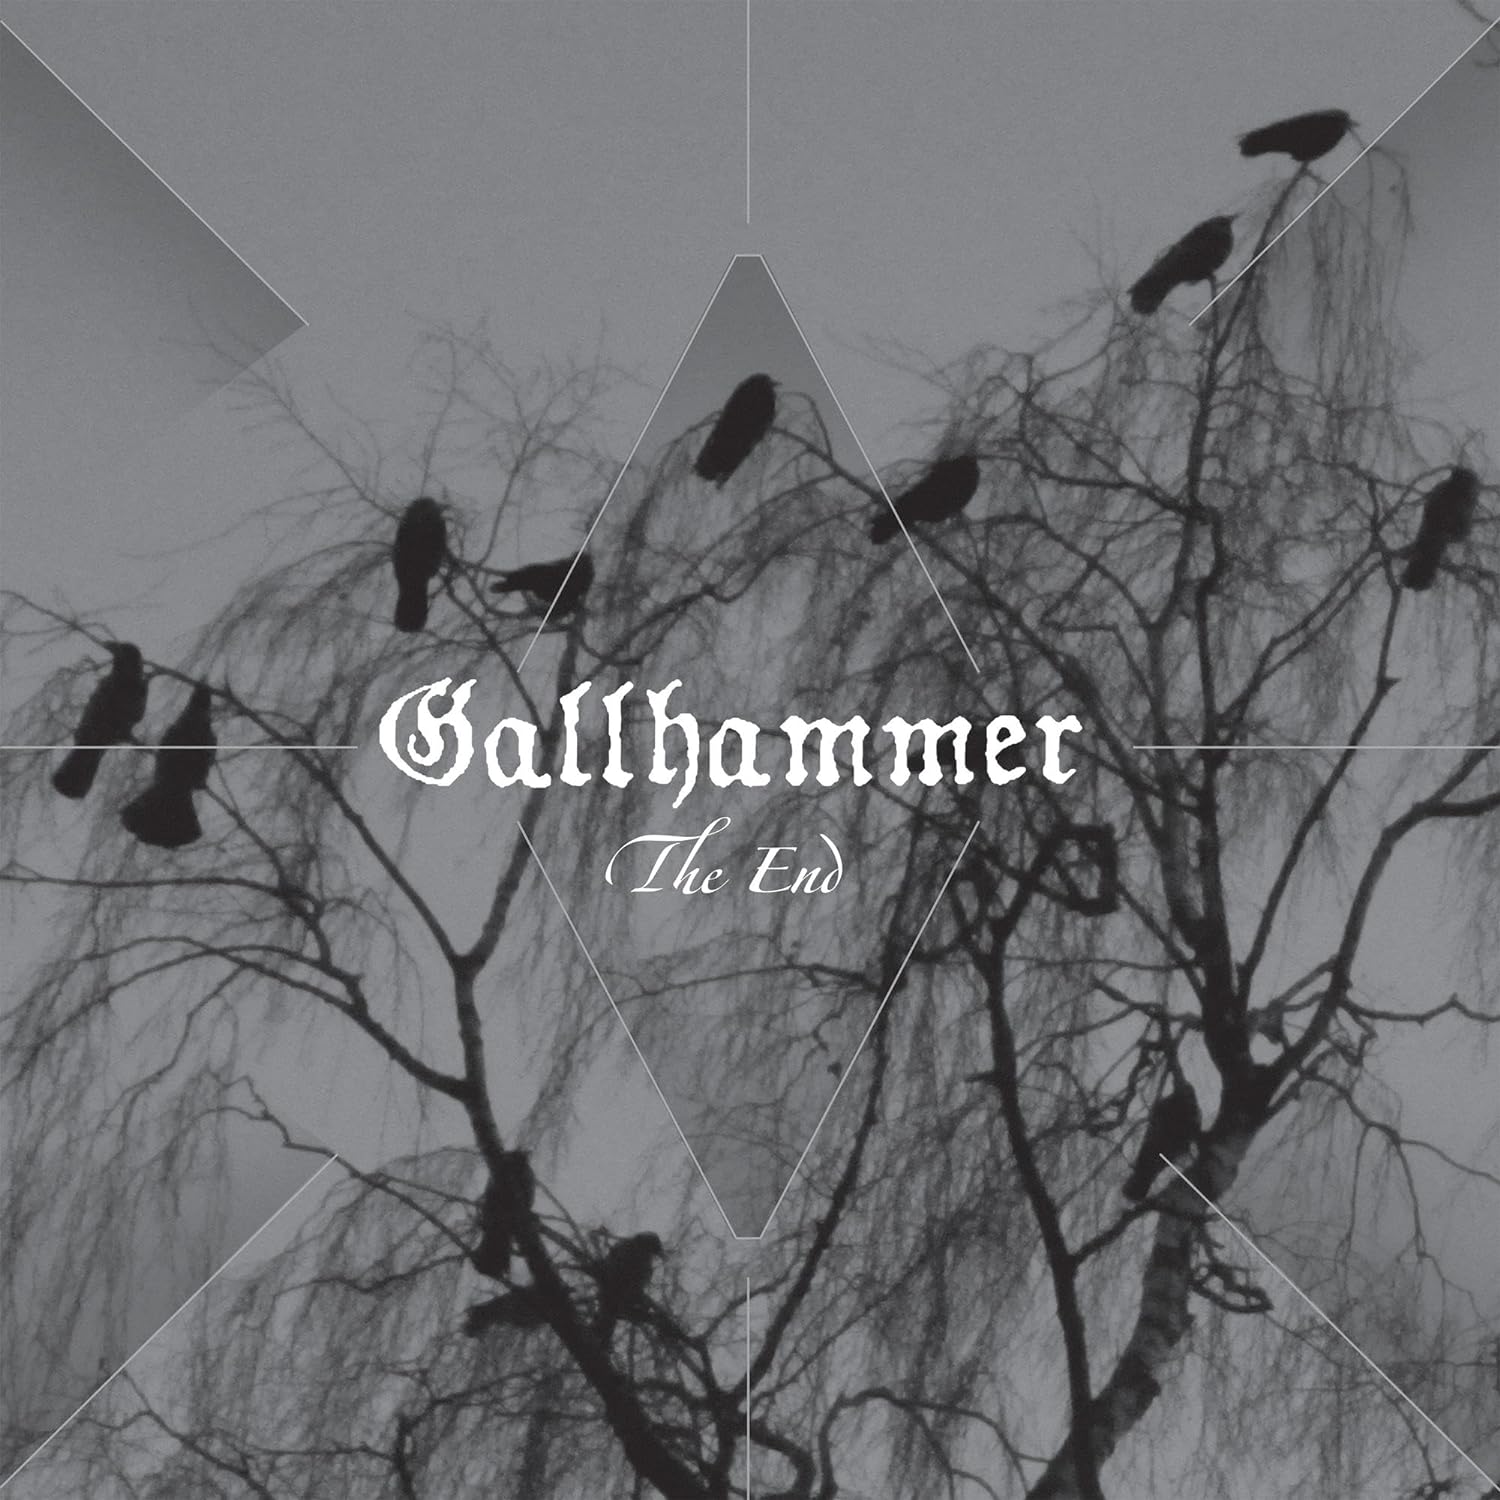 Gallhammer "The End" Vinyl - PRE-ORDER